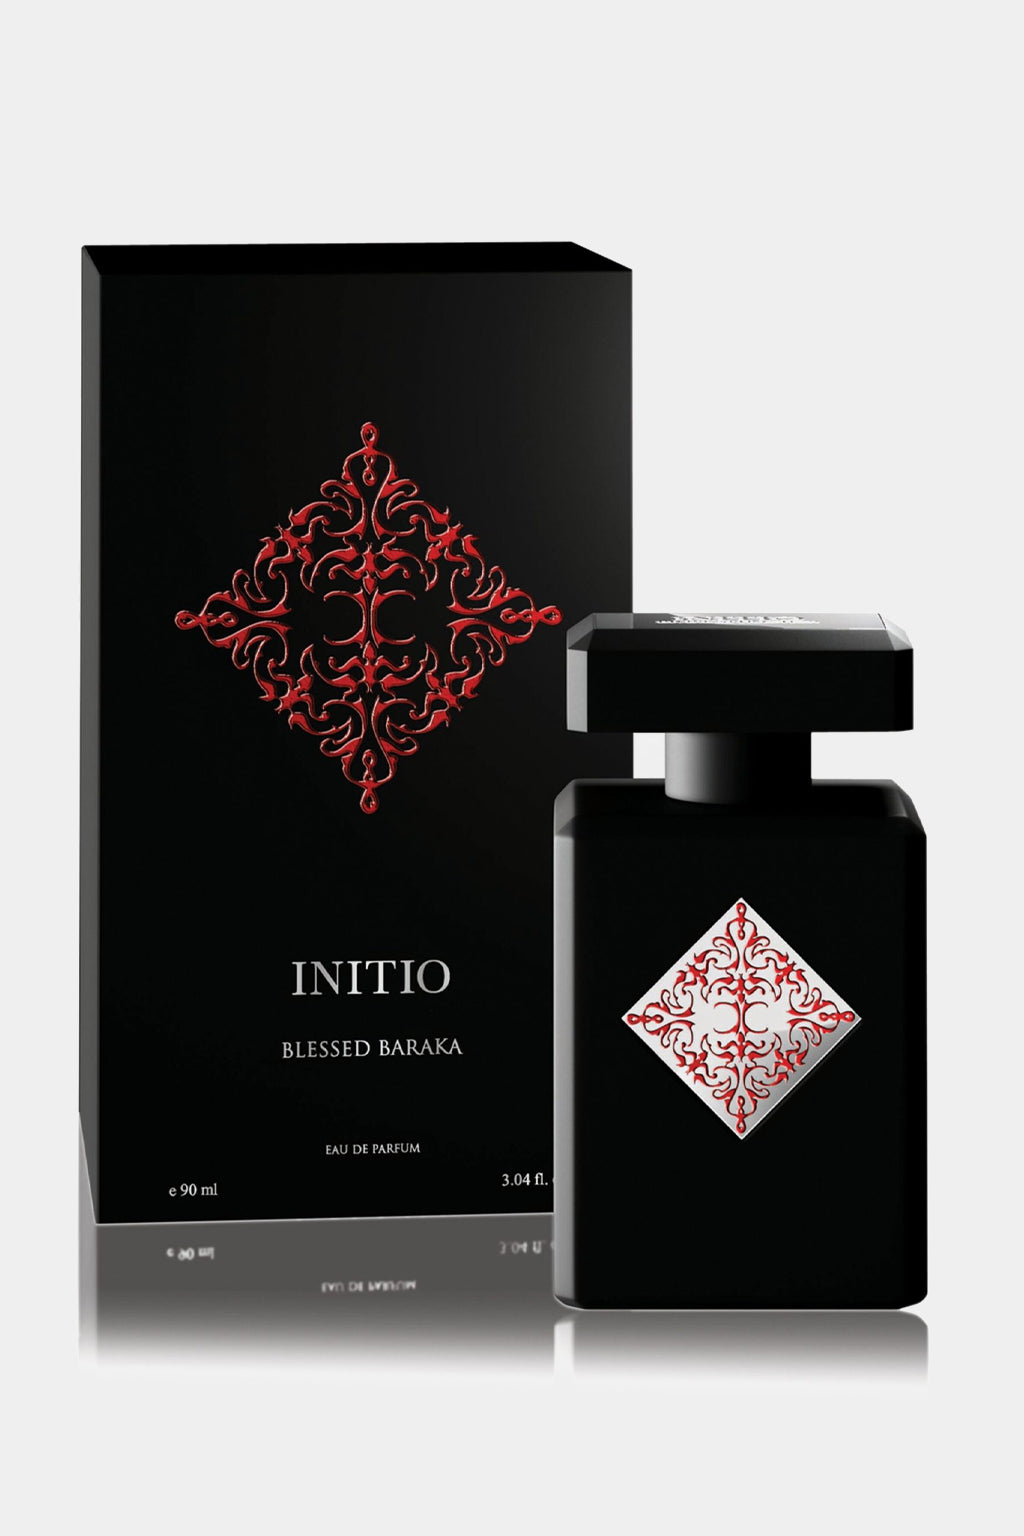 Initio - Blessed Baraka Eau de Parfume